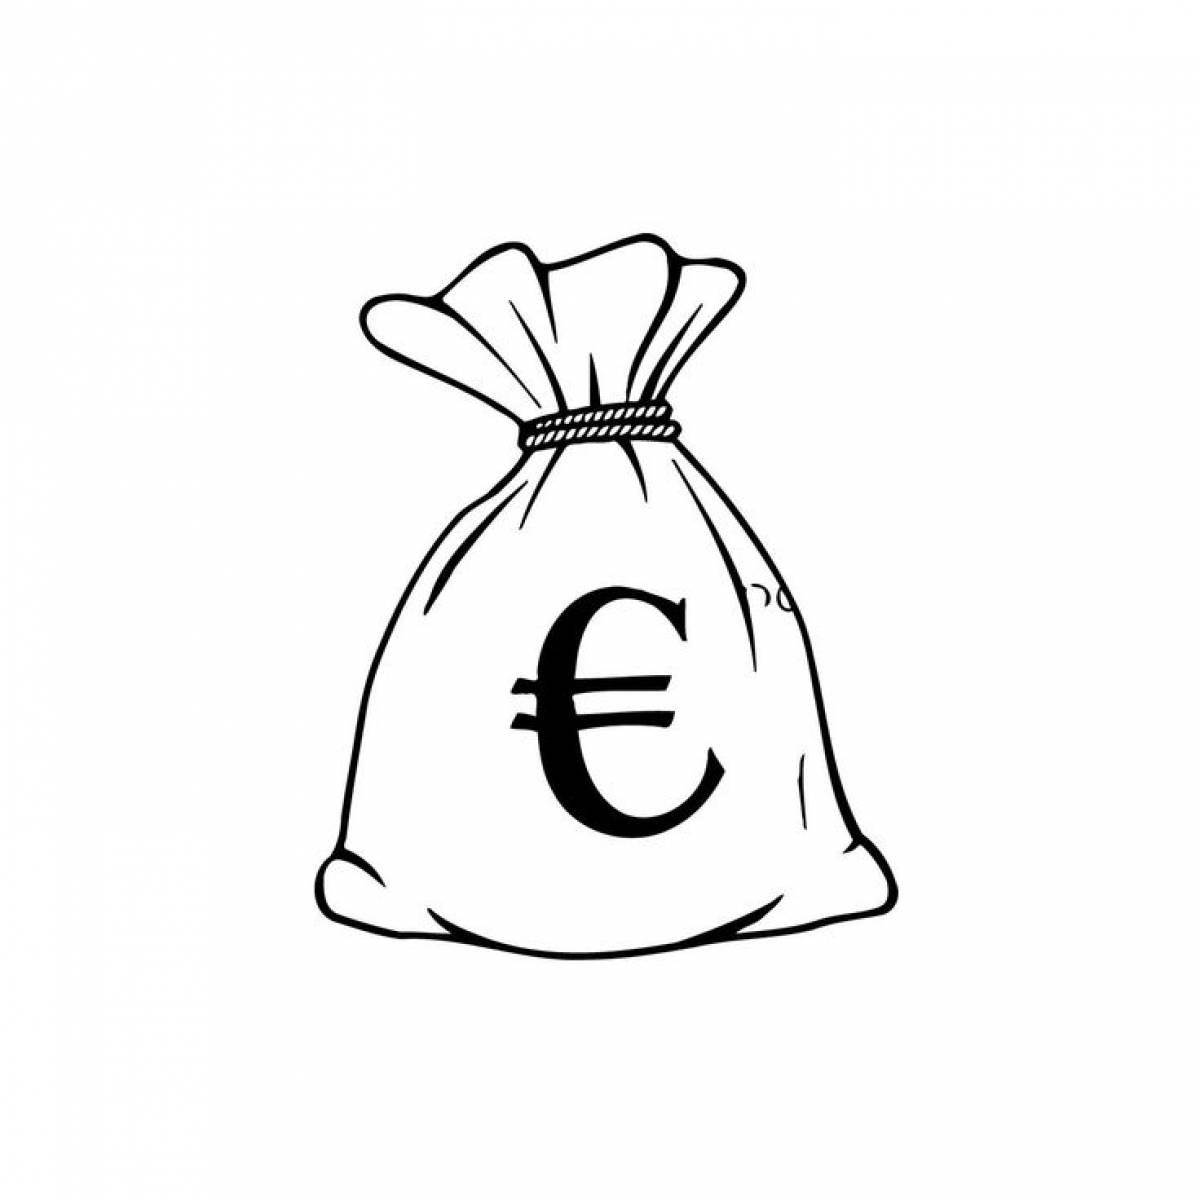 Euro bag